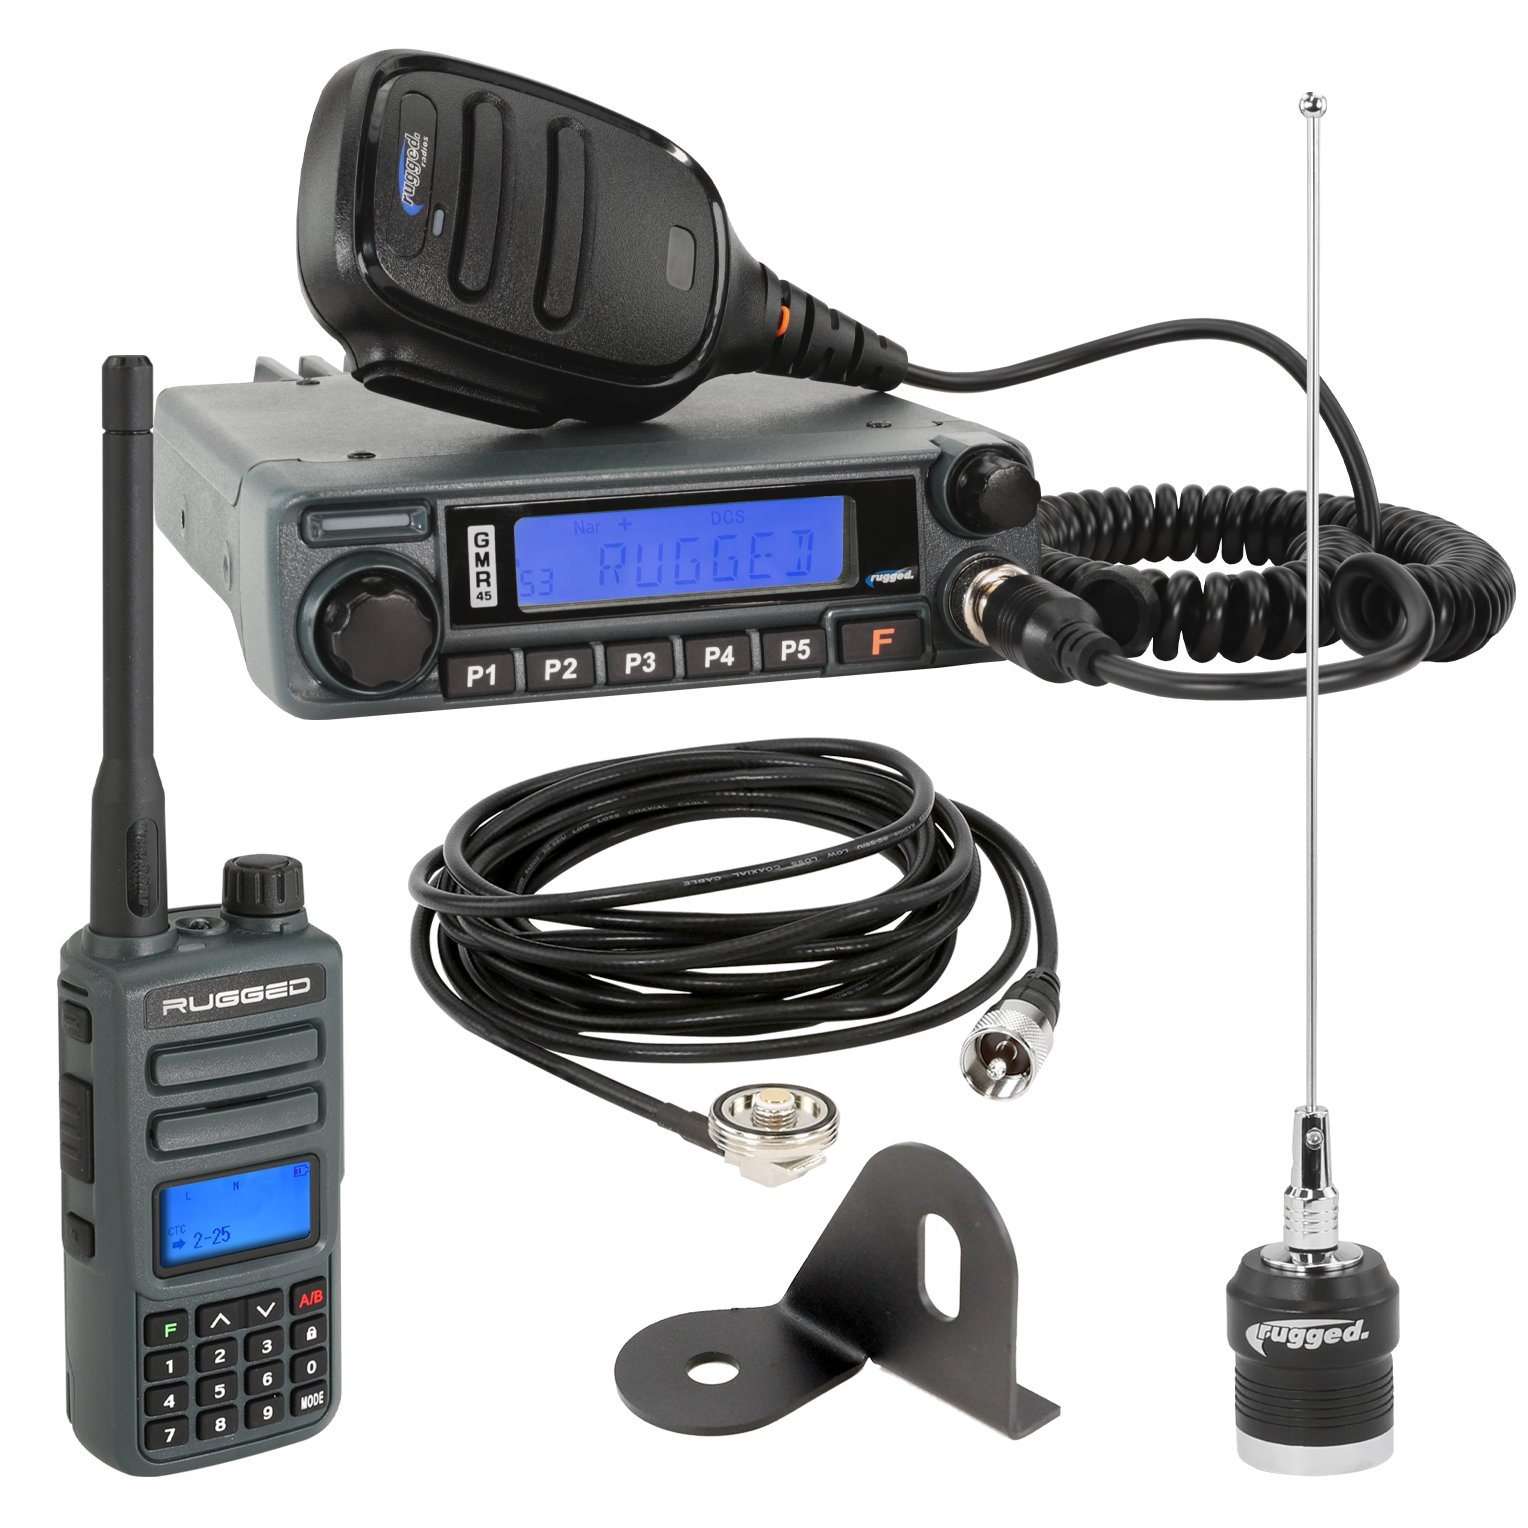 Jeep Radio Kit - GMR45 GMRS Mobile Radio and GMR2 Handheld